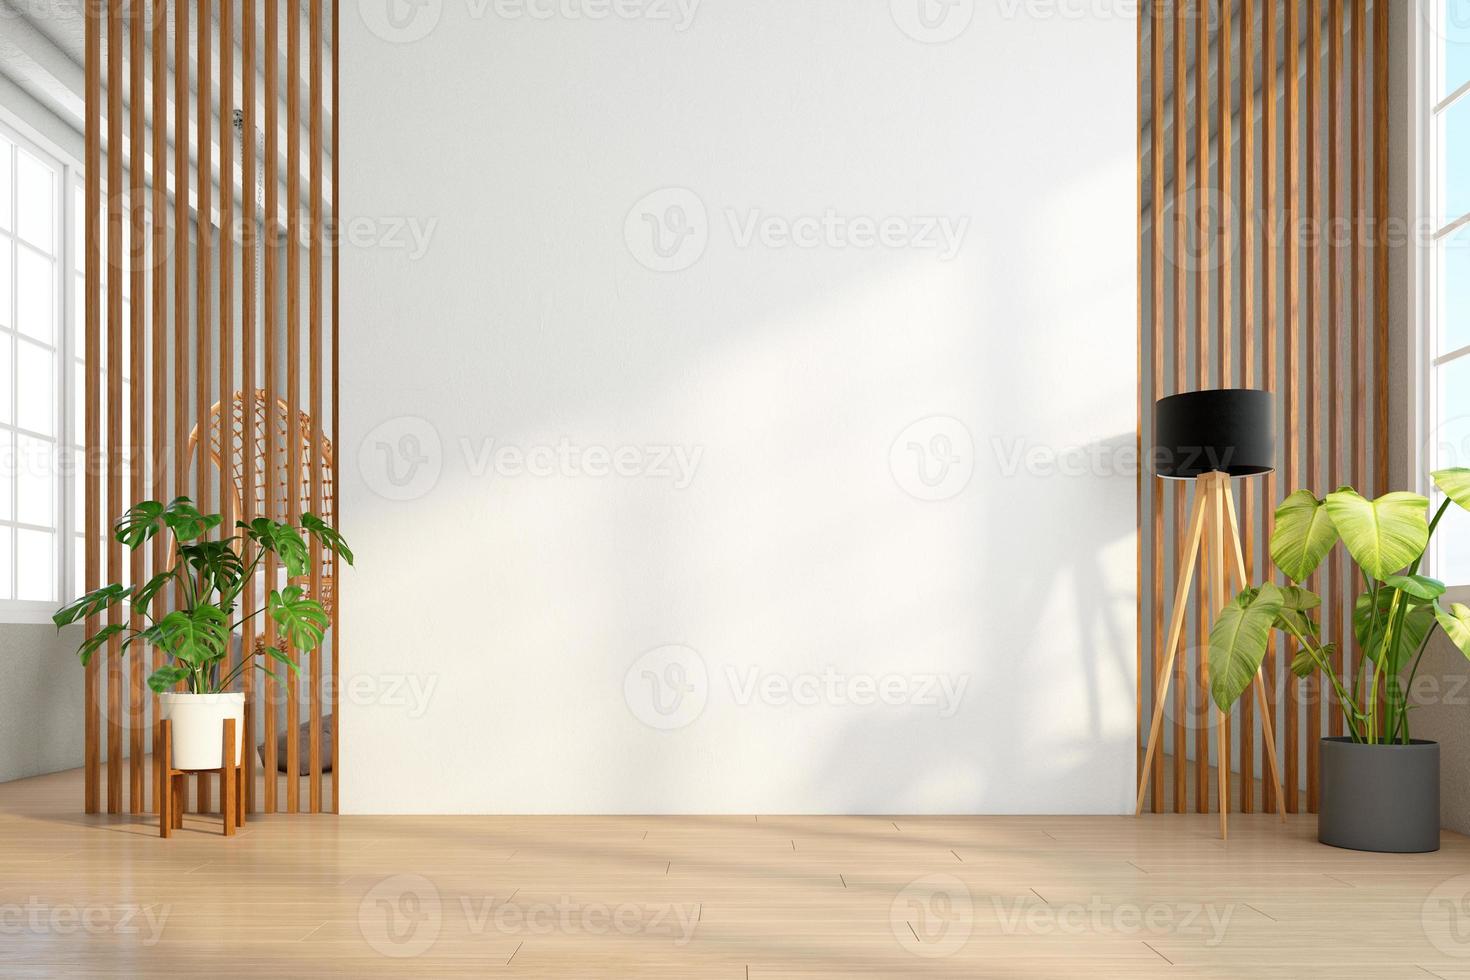 lege kamer met houten latje muur en witte muur, staande lamp. 3D-rendering foto